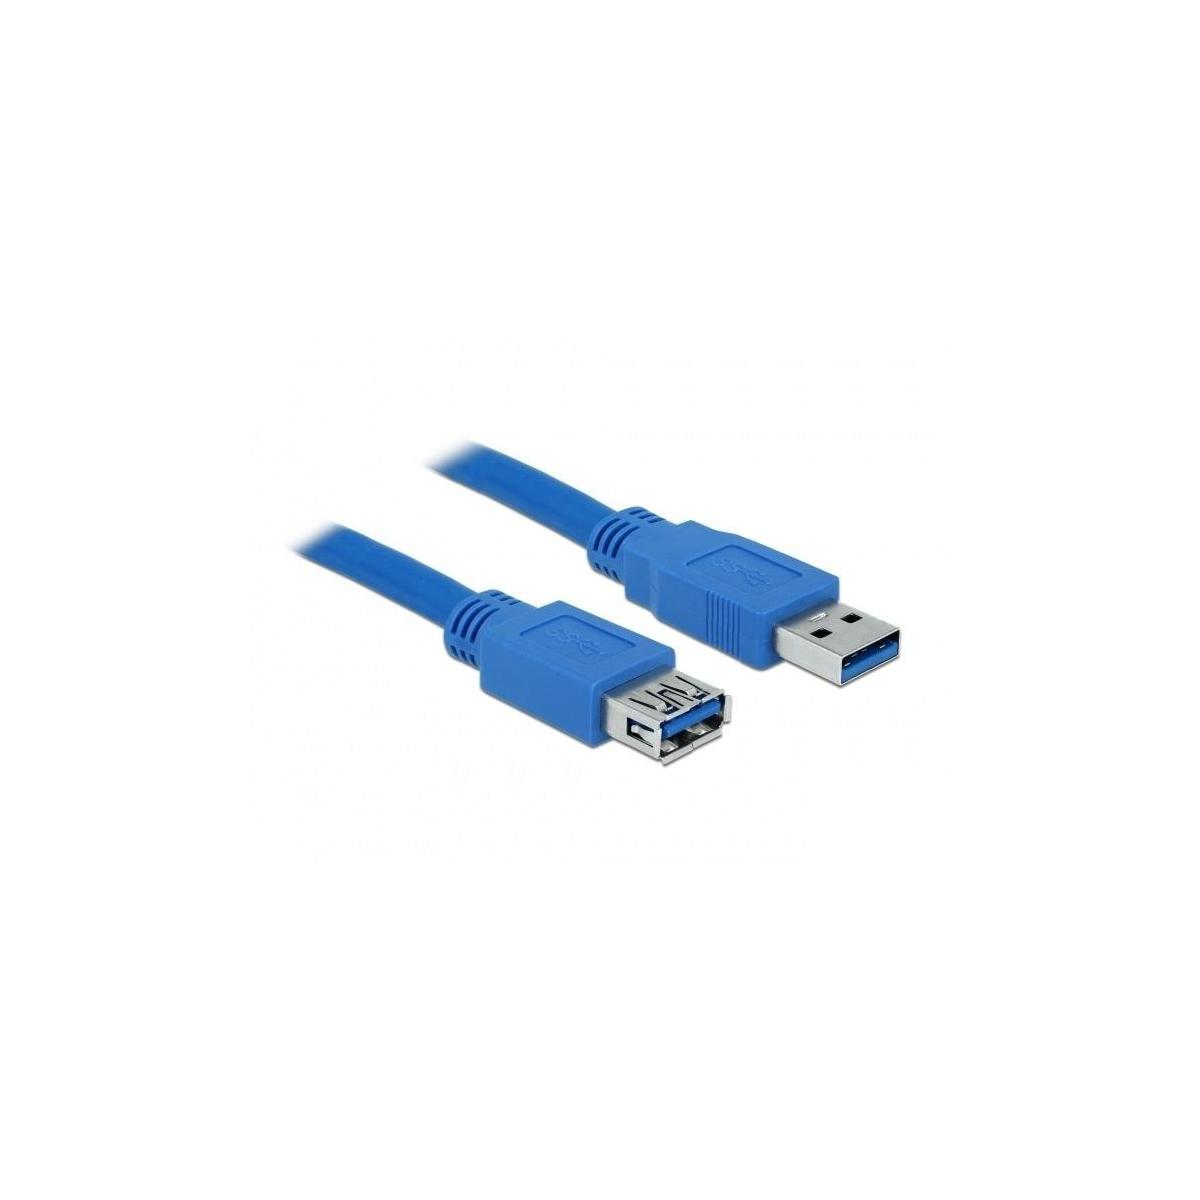 DELOCK DELOCK Kabel USB & Kabel, Peripheriegeräte mehrfarbig Verlaeng 3.0 5mSt/B A/A USB Zubehör